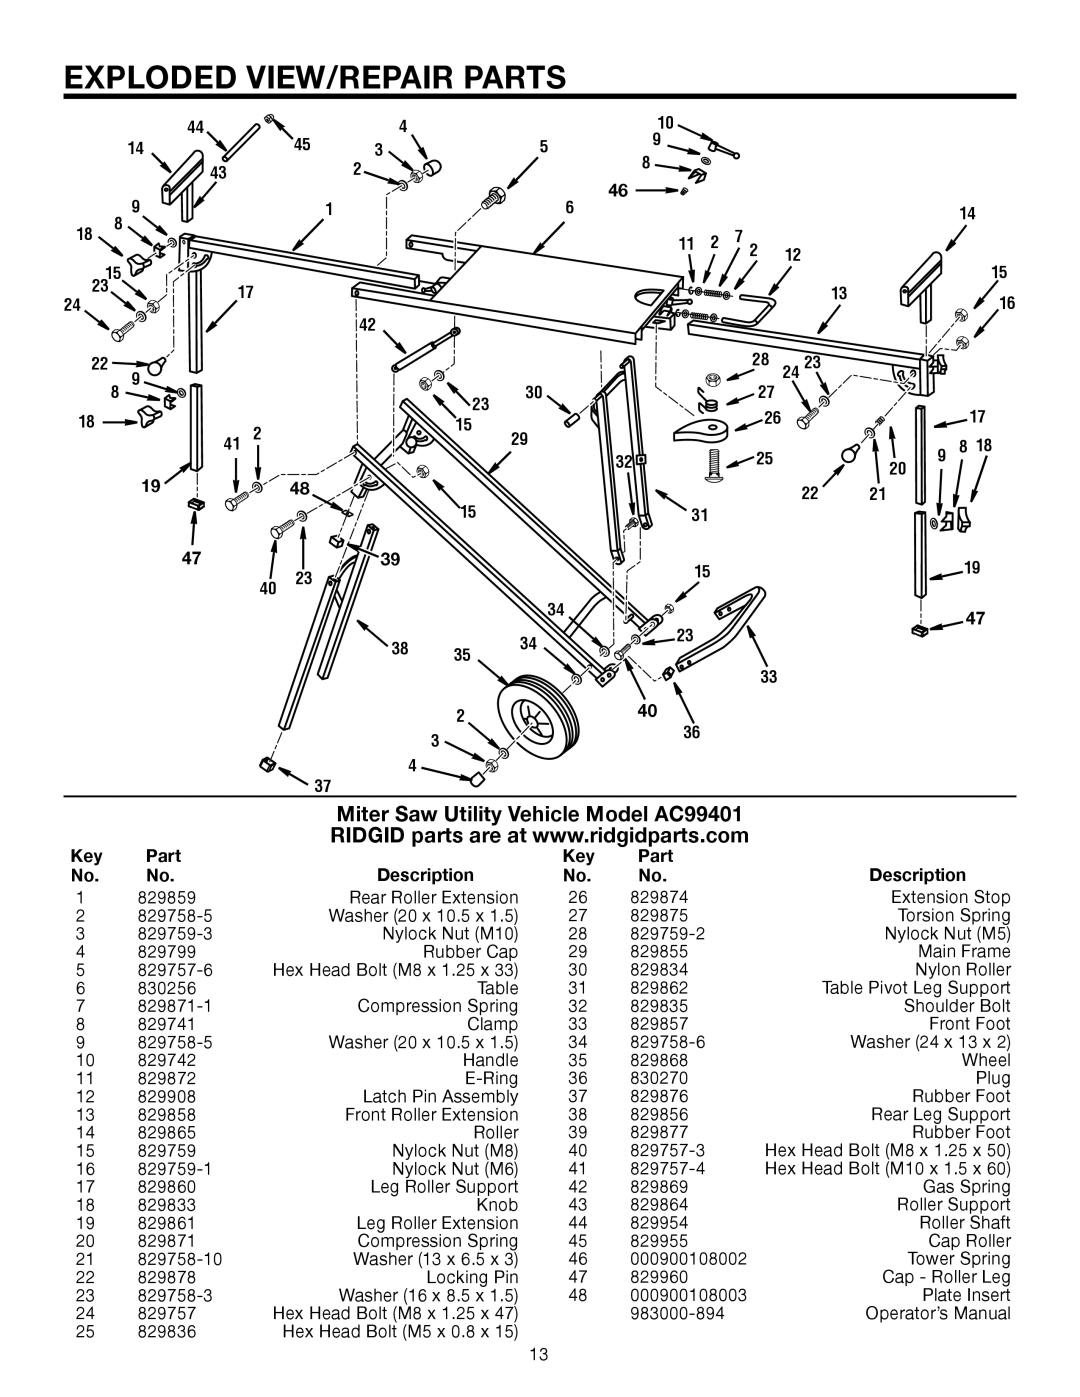 RIDGID AC99402 Exploded View/Repair Parts, Miter Saw Utility Vehicle Model AC99401, 2315 22 8, Description, 1939, 1937 